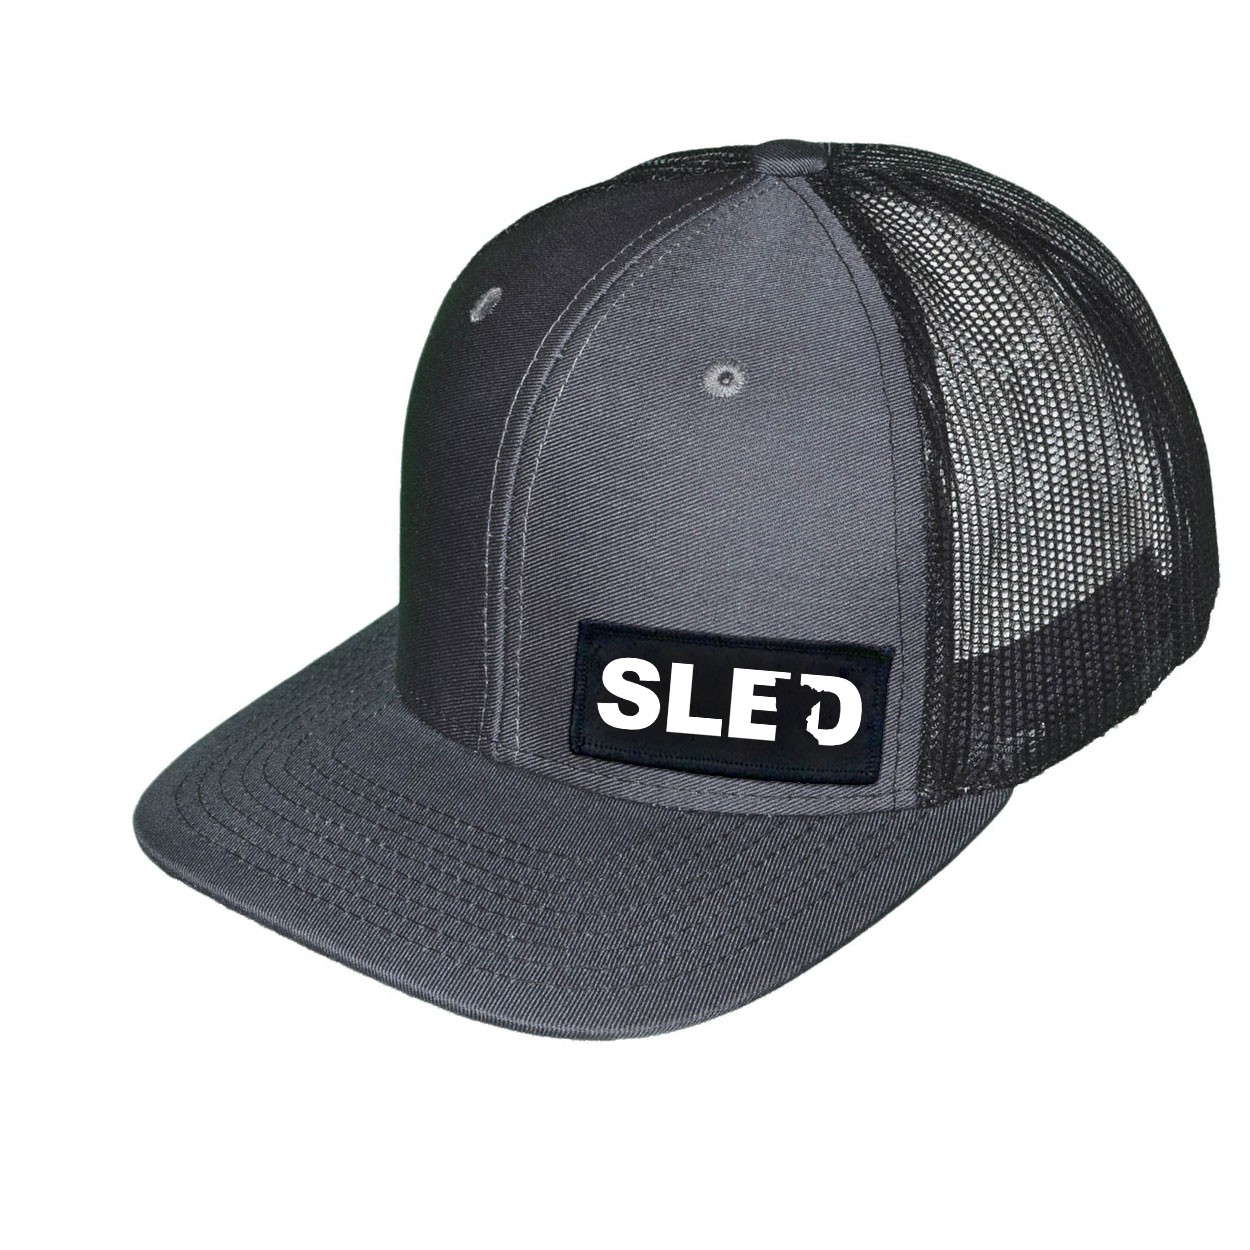 Sled Minnesota Night Out Woven Patch Snapback Trucker Hat Dark Gray/Black (White Logo)